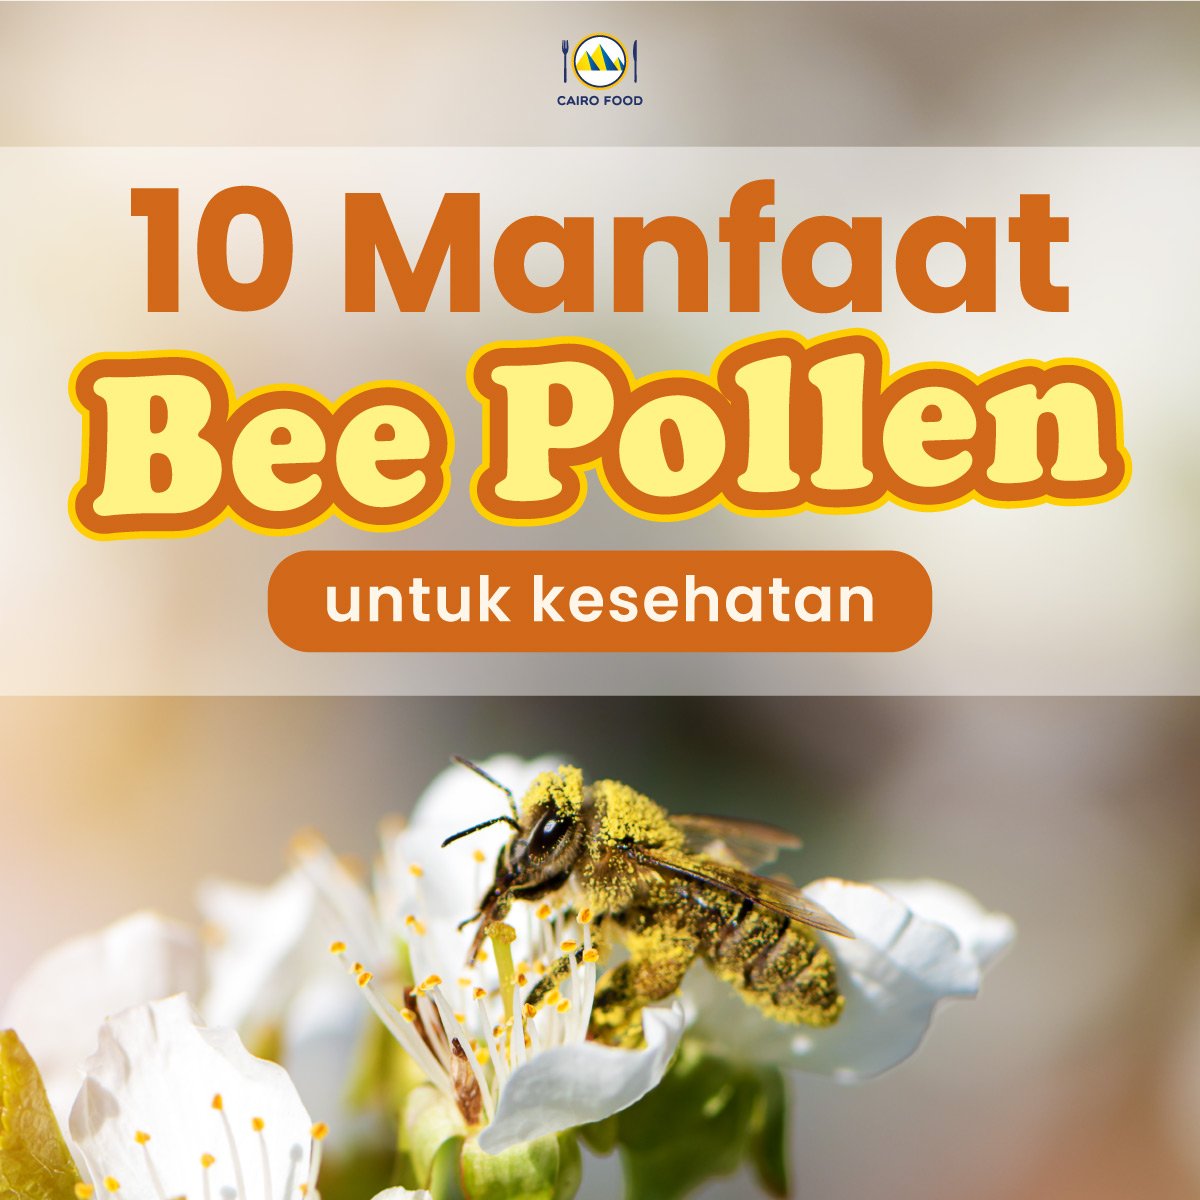 10 manfaat bee pollen untuk kesehatan